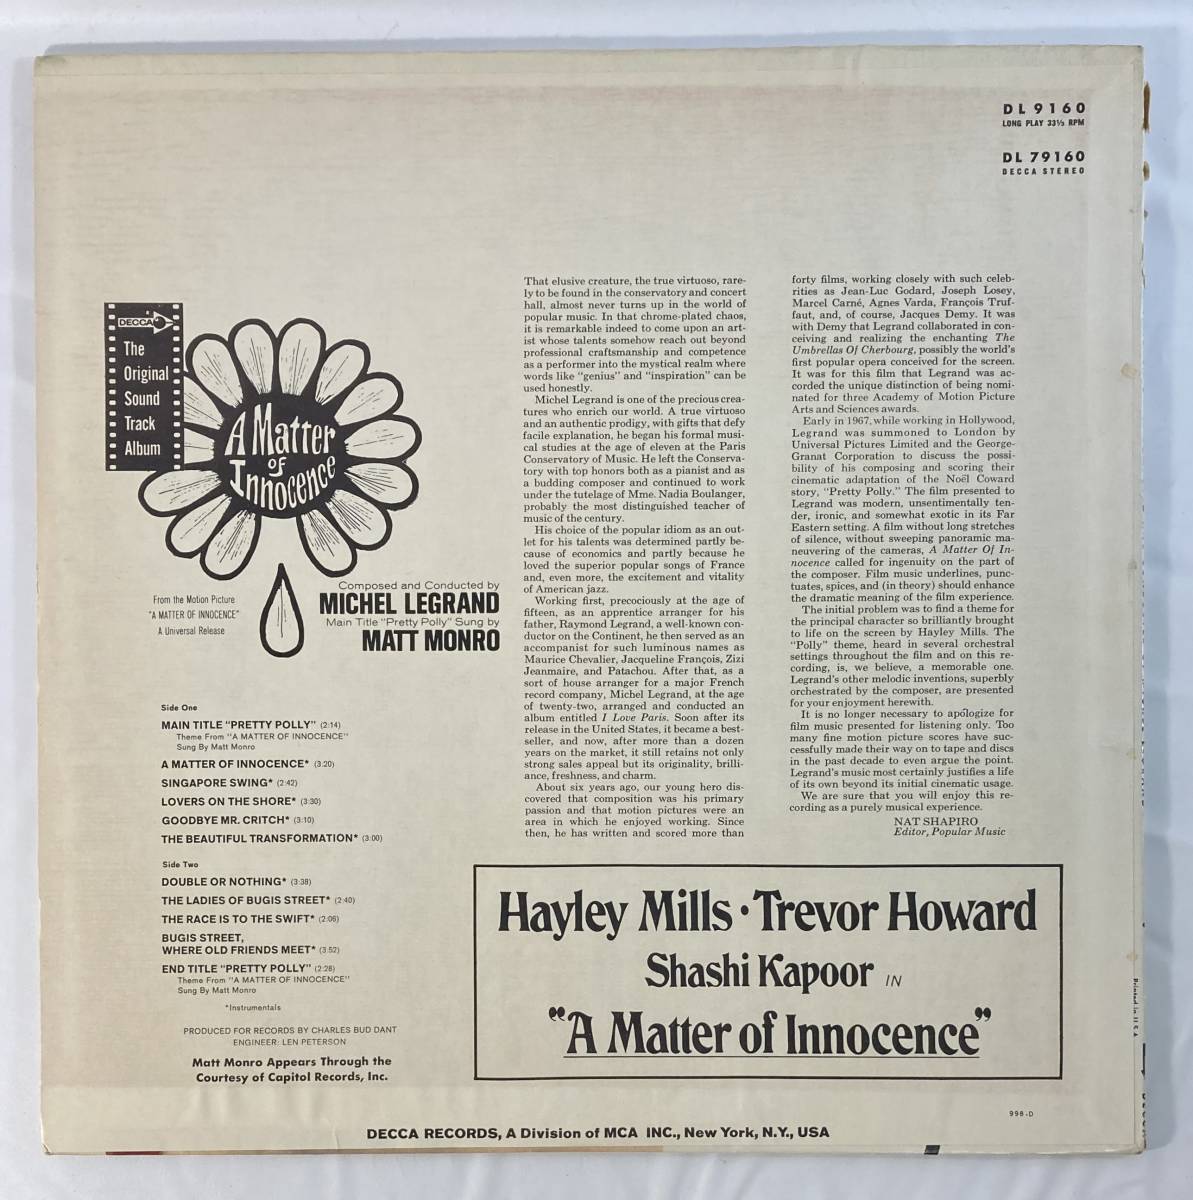 A Matter of Innocence (1967) Michel * legrand rice record LP DECCA DL 79160 STEREO